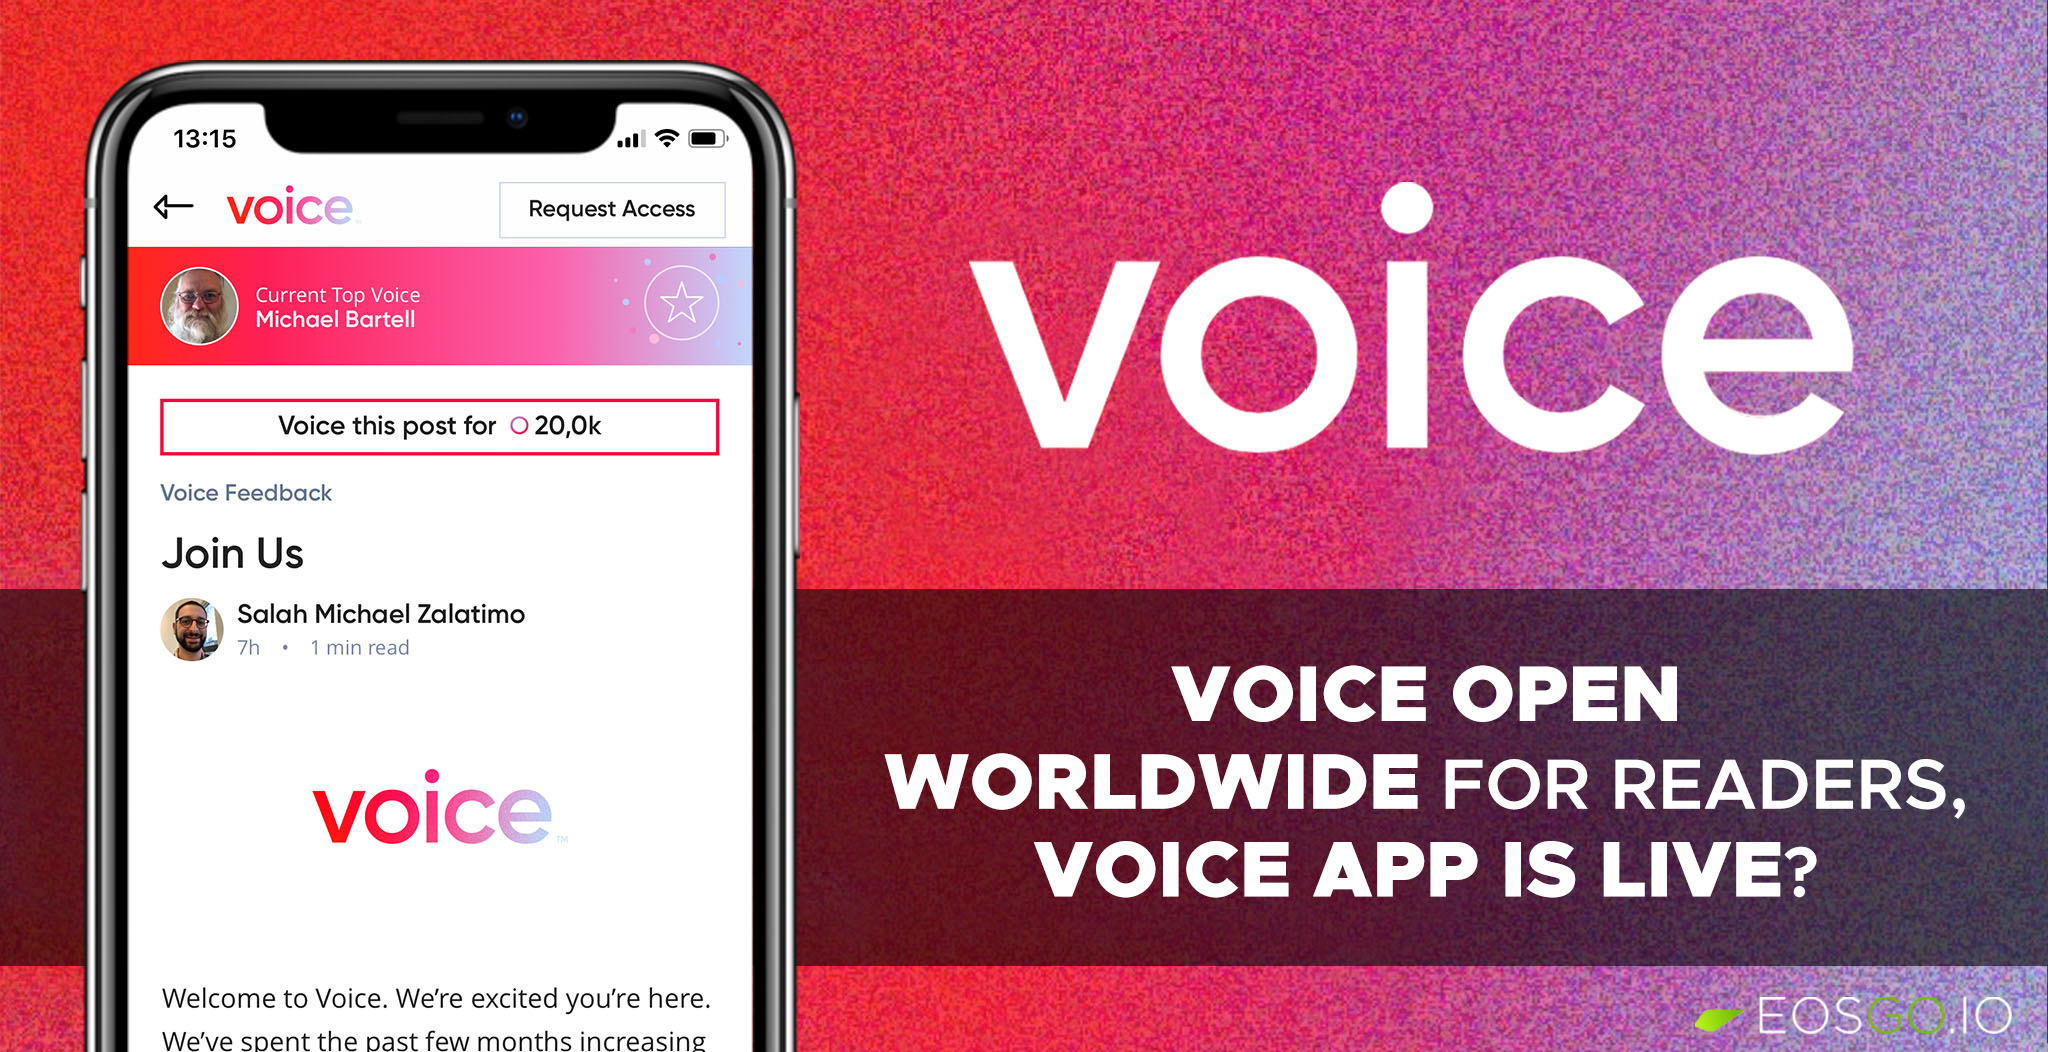 voice-open-worldwide-voice-app-is-livev